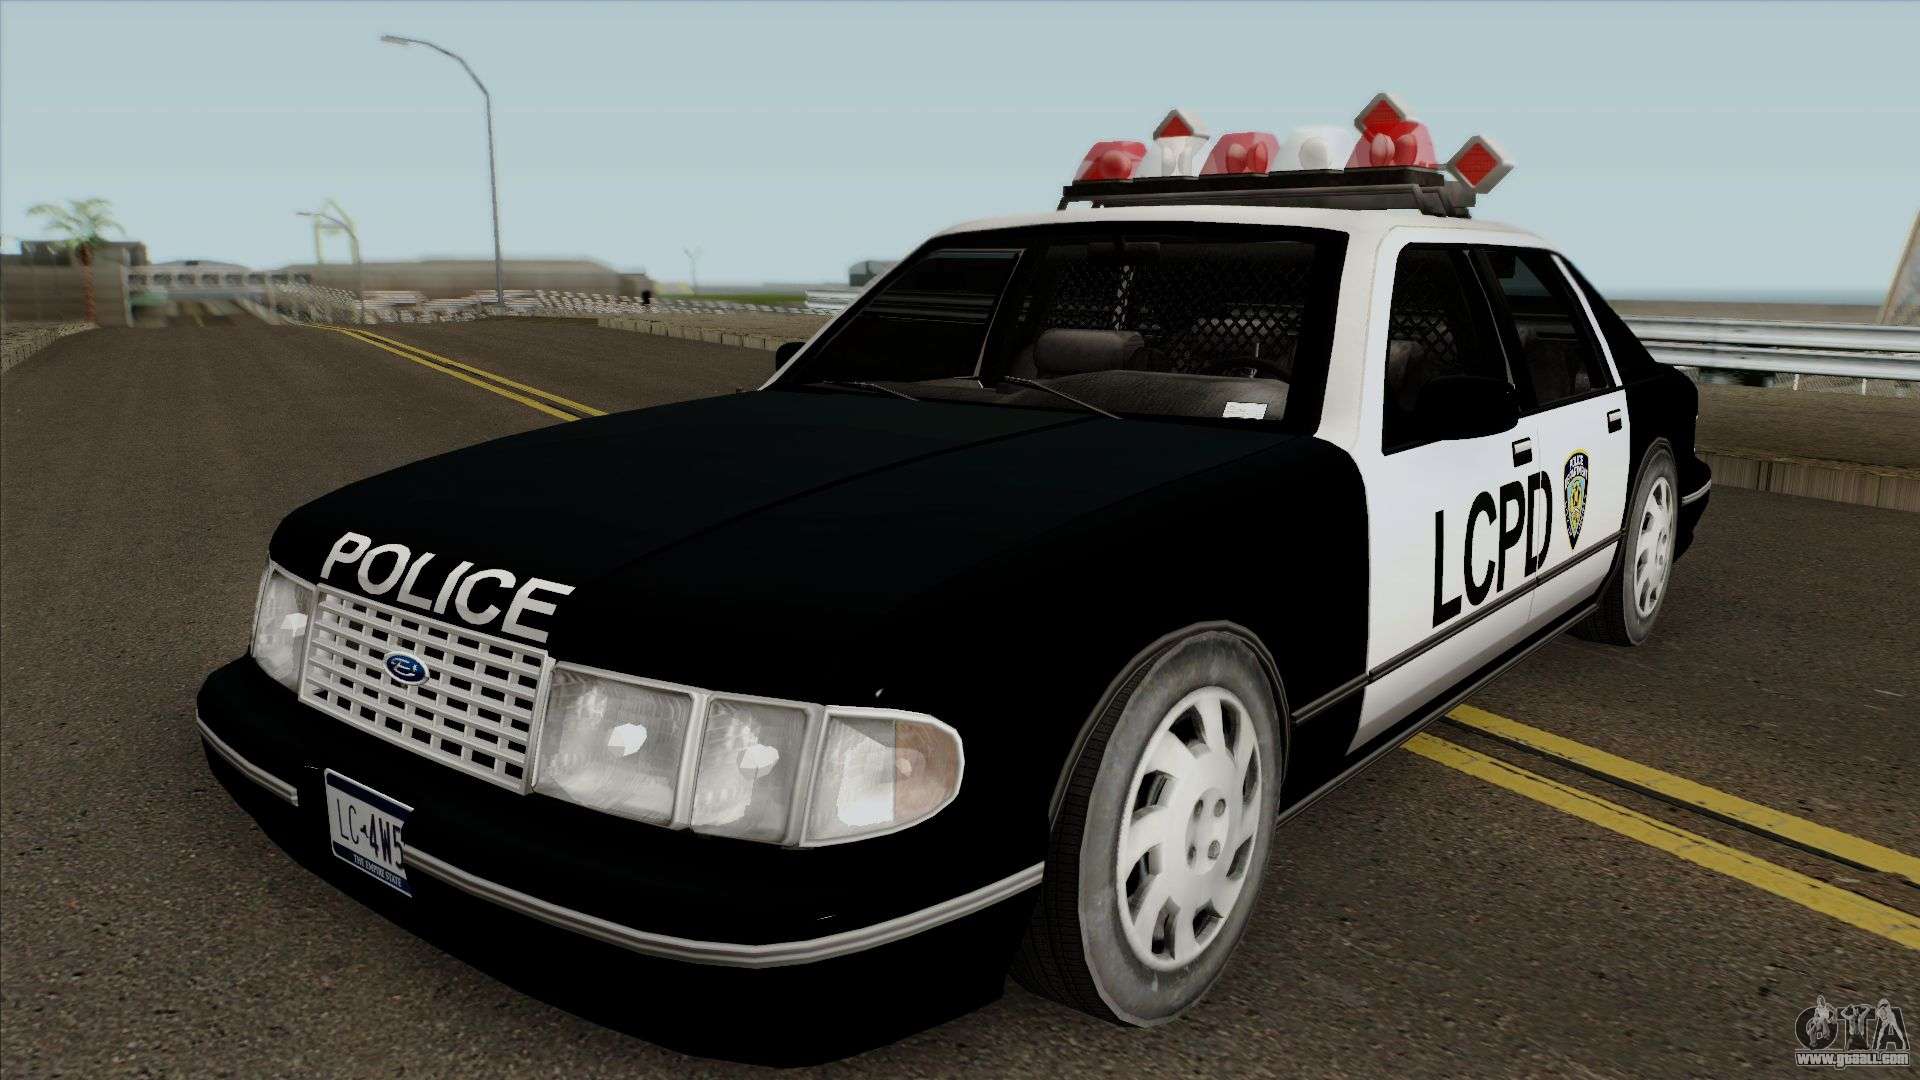 Police Car HD for GTA San Andreas